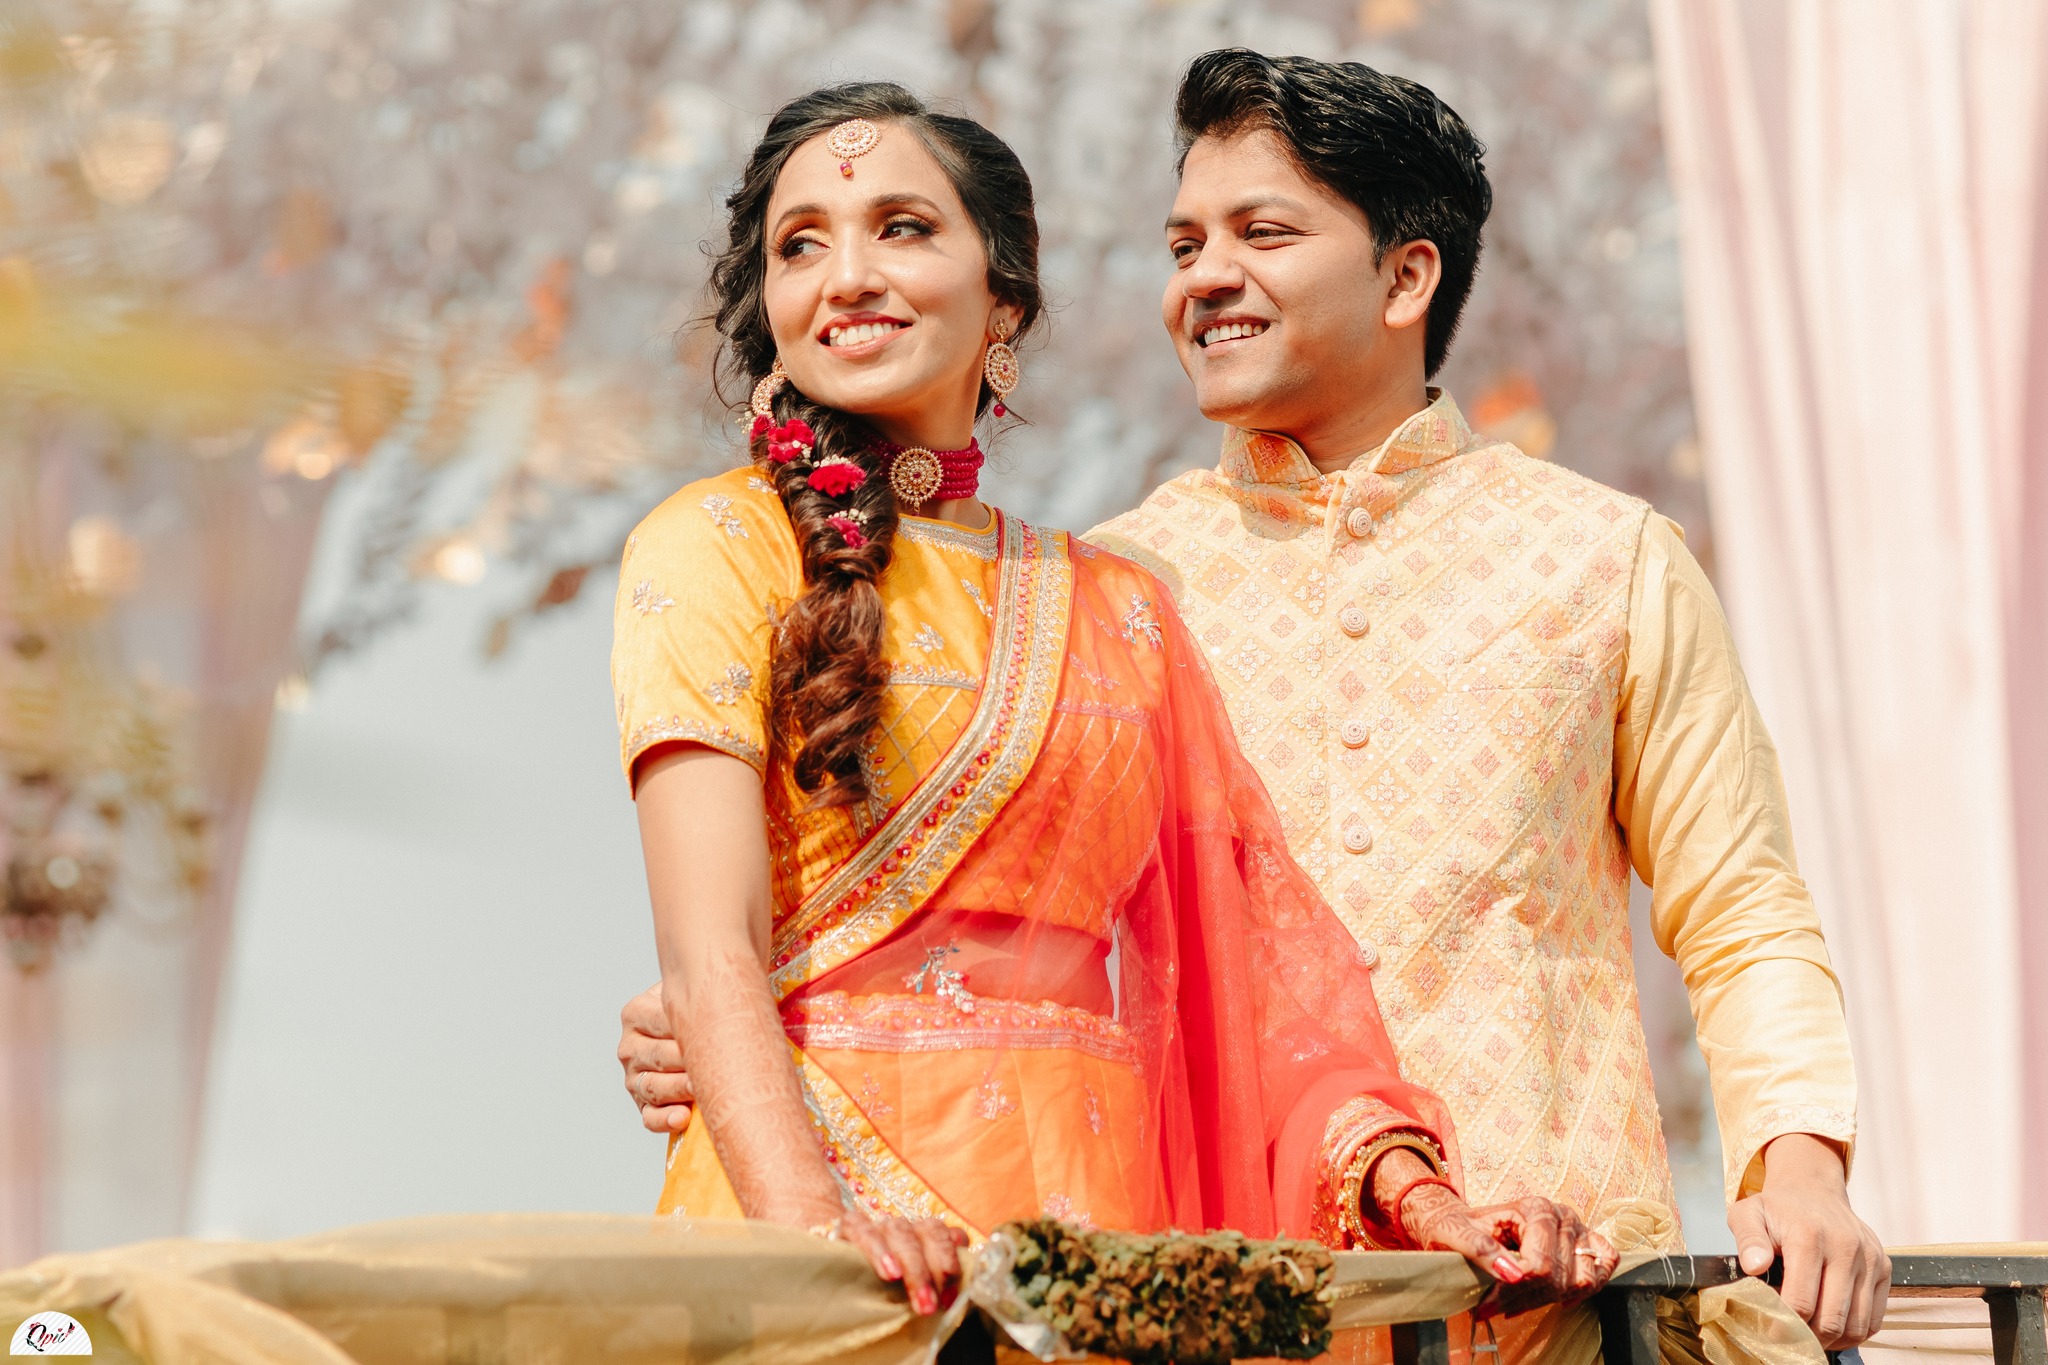 22 Best Mehndi poses ideas  indian wedding photography mehendi  photography bridal photography poses